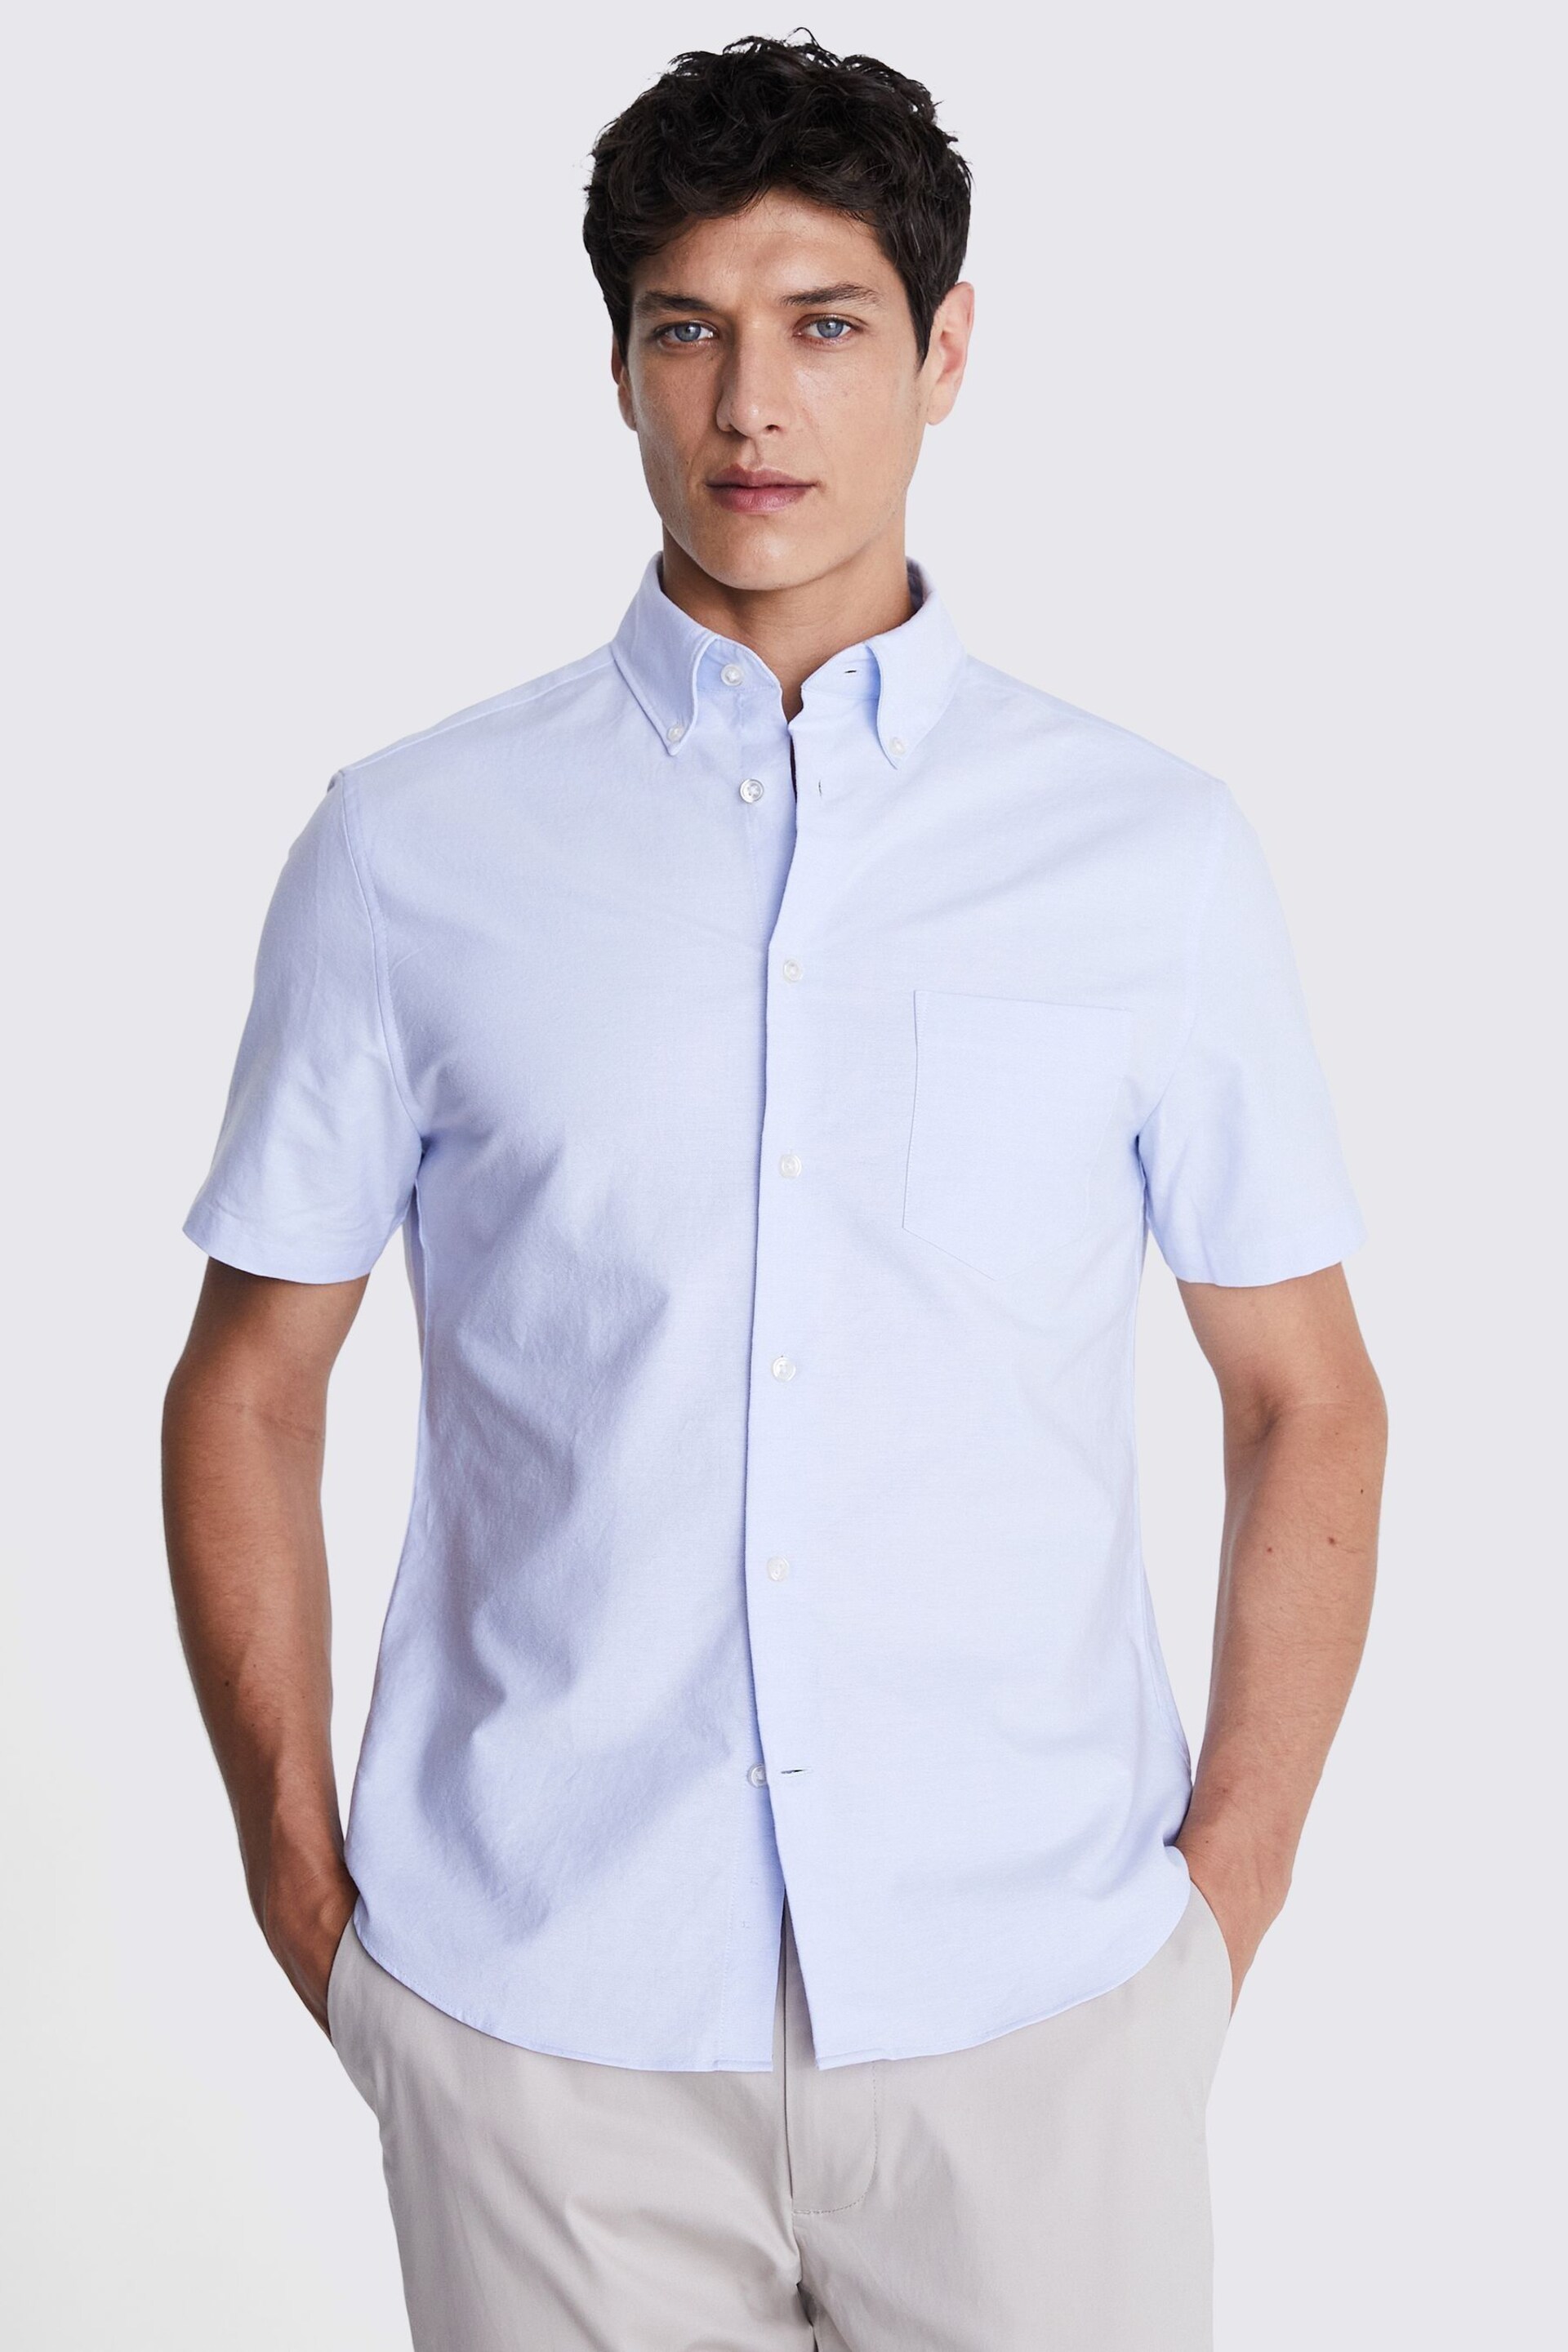 MOSS Blue Short Sleeve Washed Oxford Shirt - Image 1 of 4